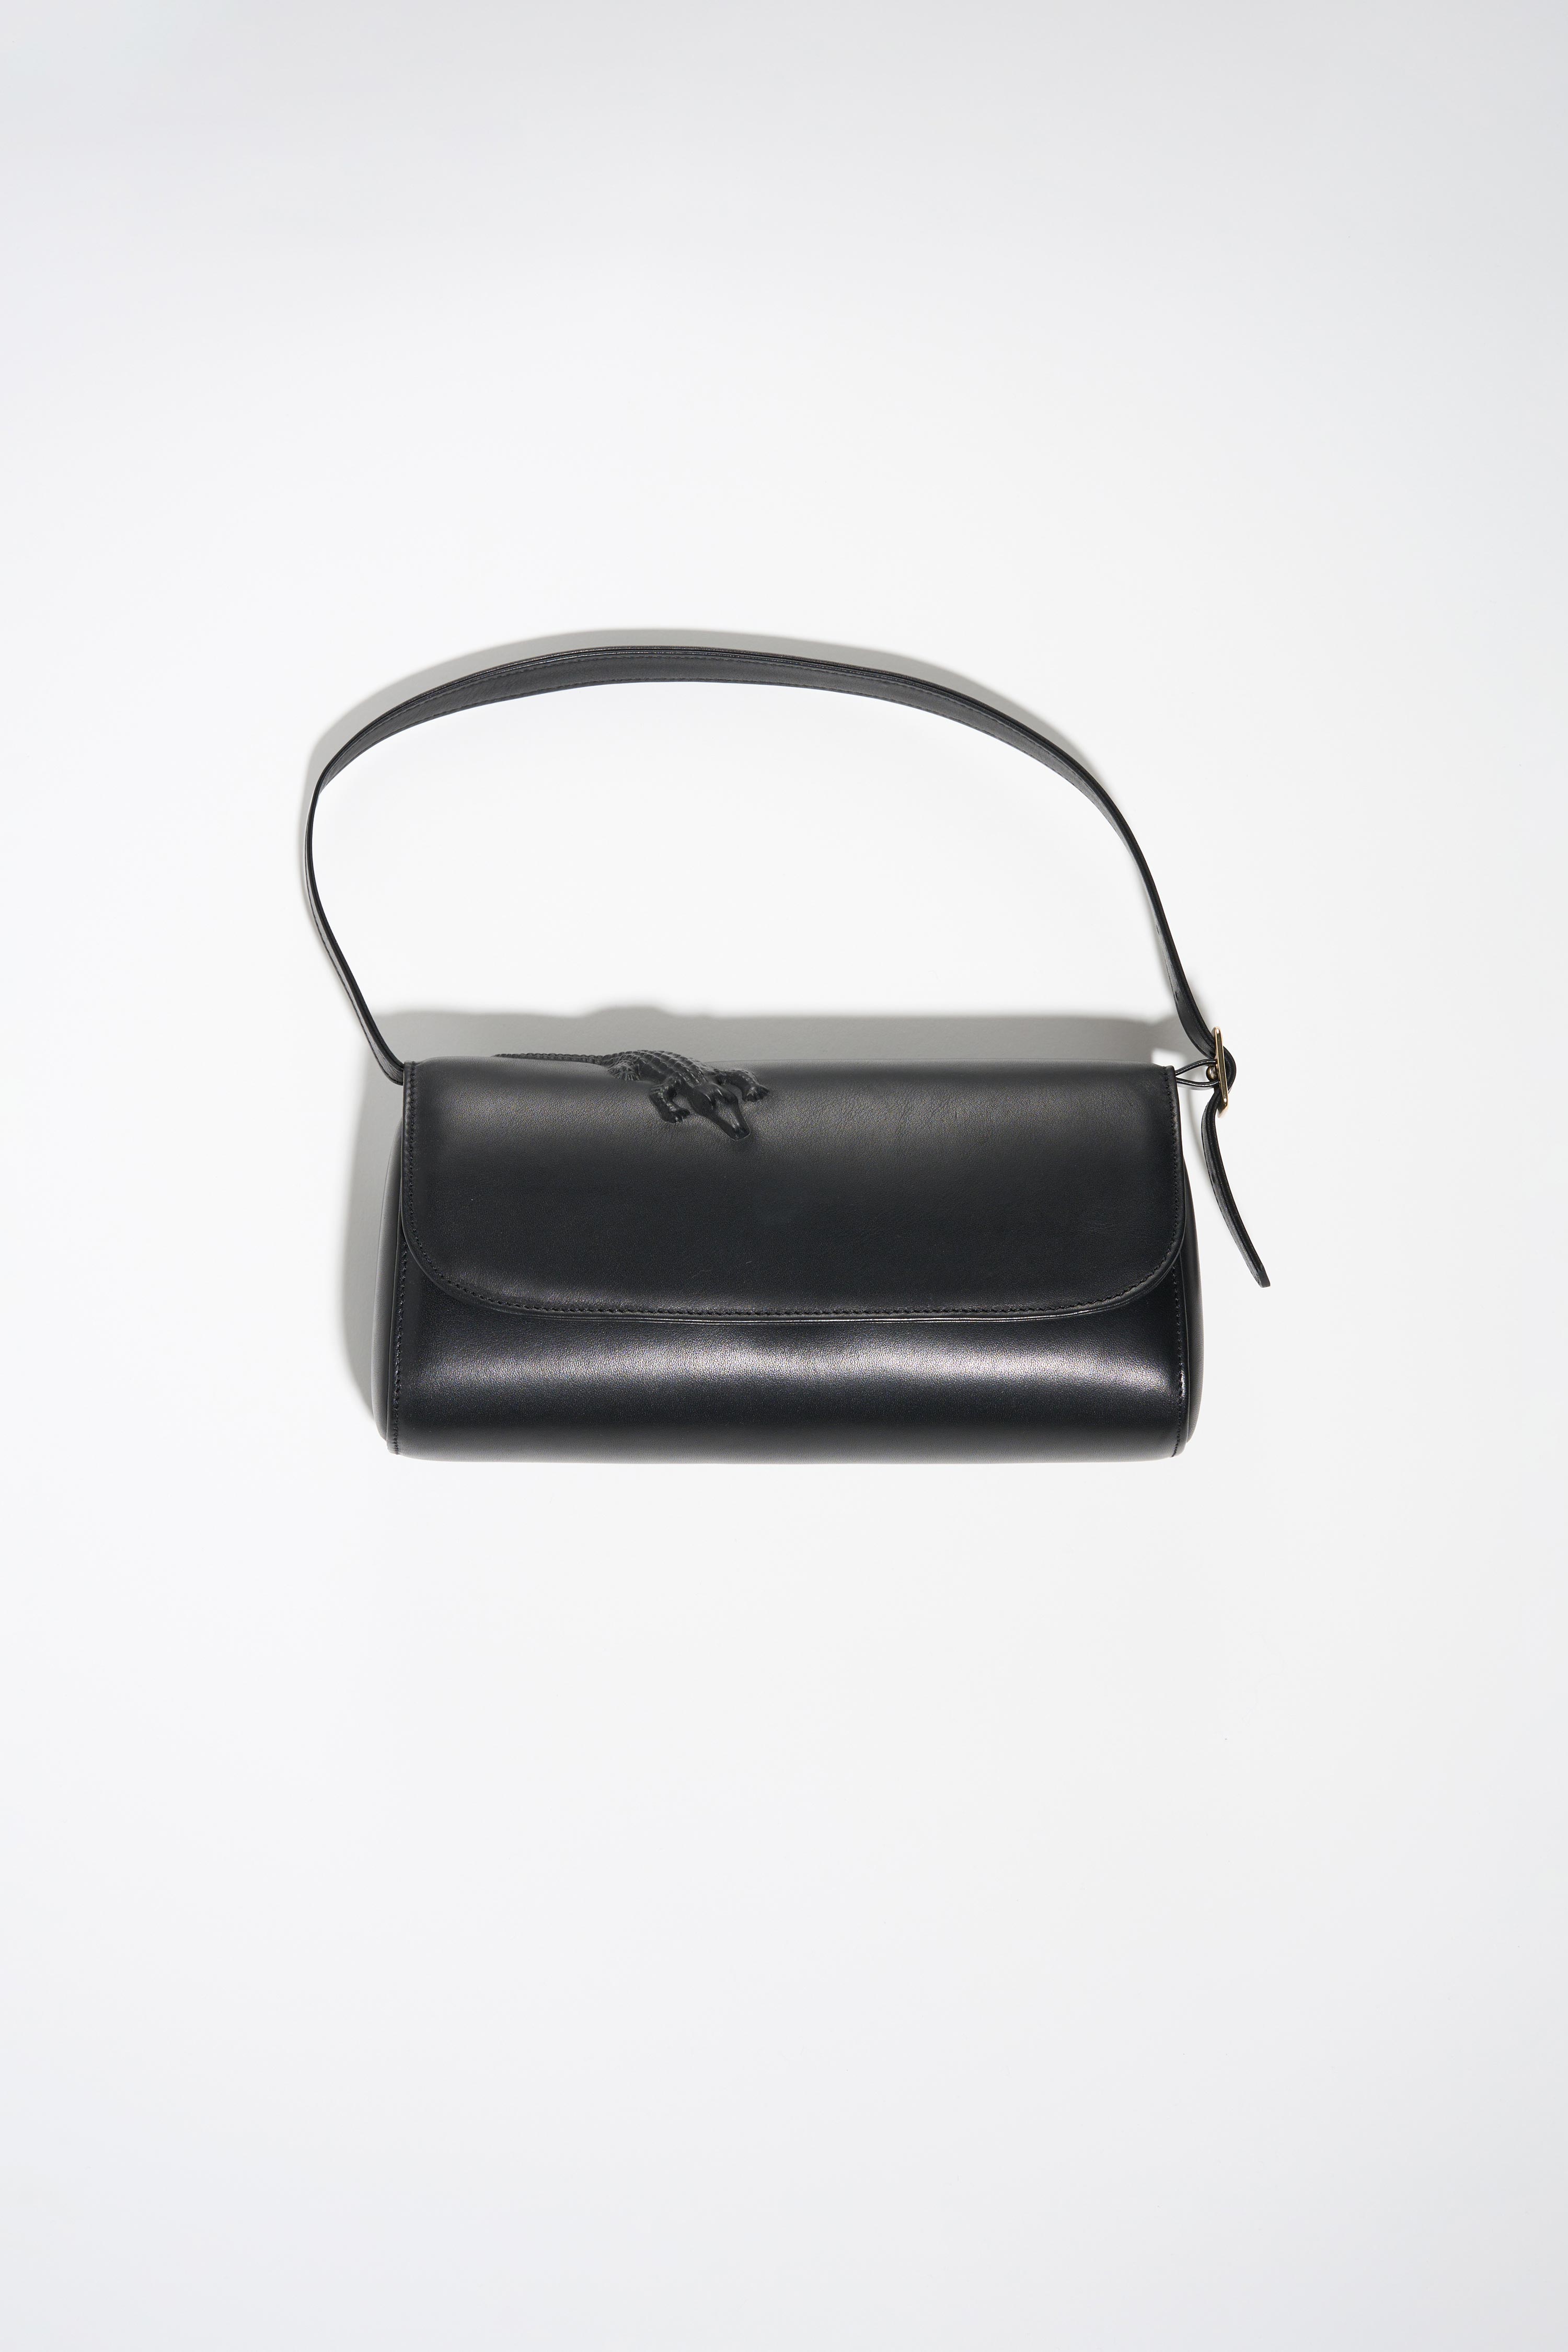 Lets talk all about Louis Vuitton's Epi Leather!!